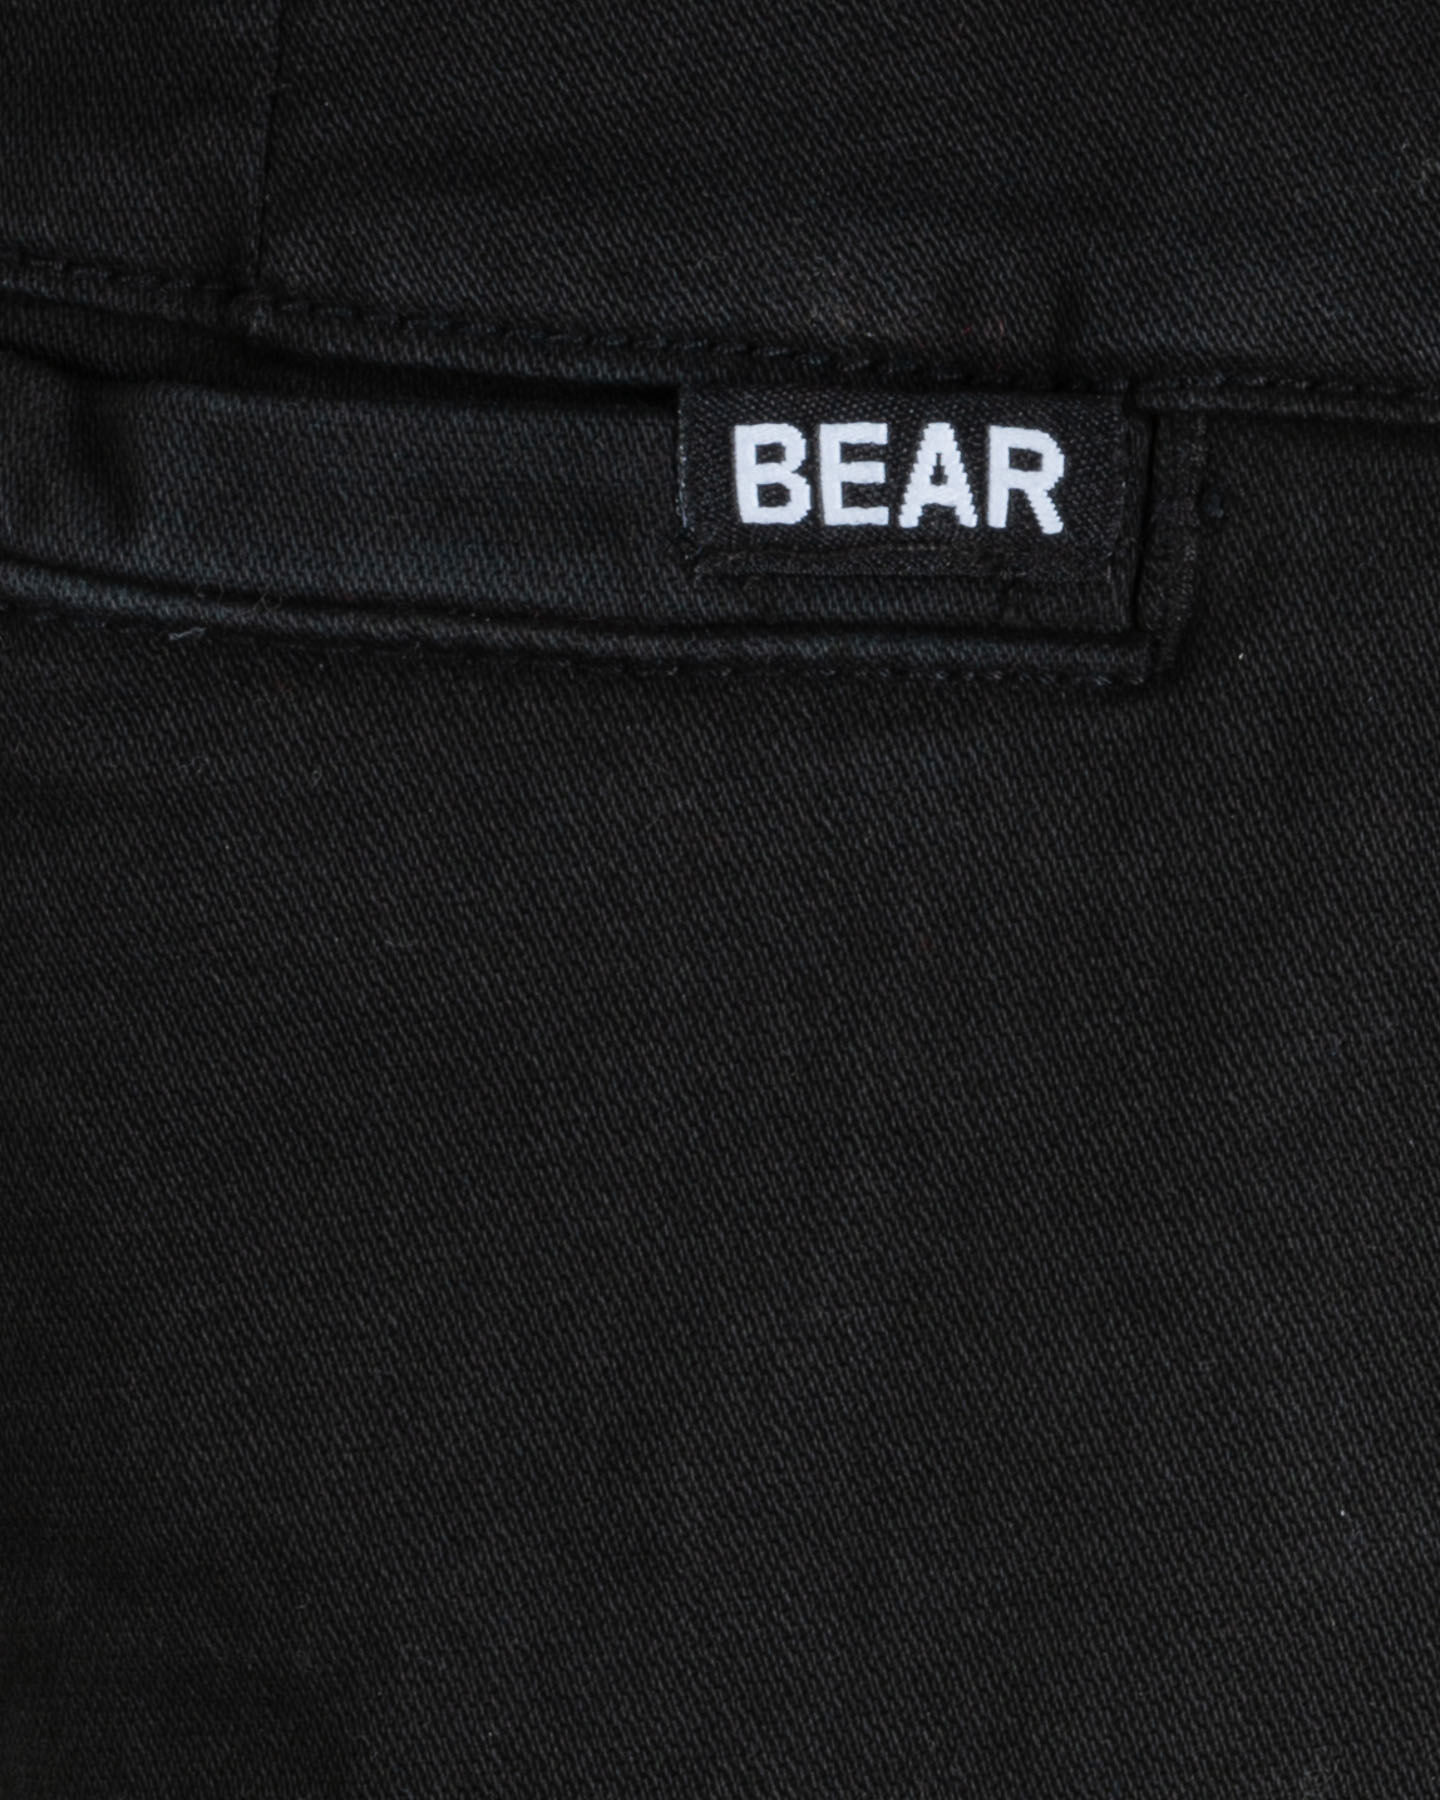  Pantalone BEAR SEASONAL JR S4108755|050|8 scatto 2